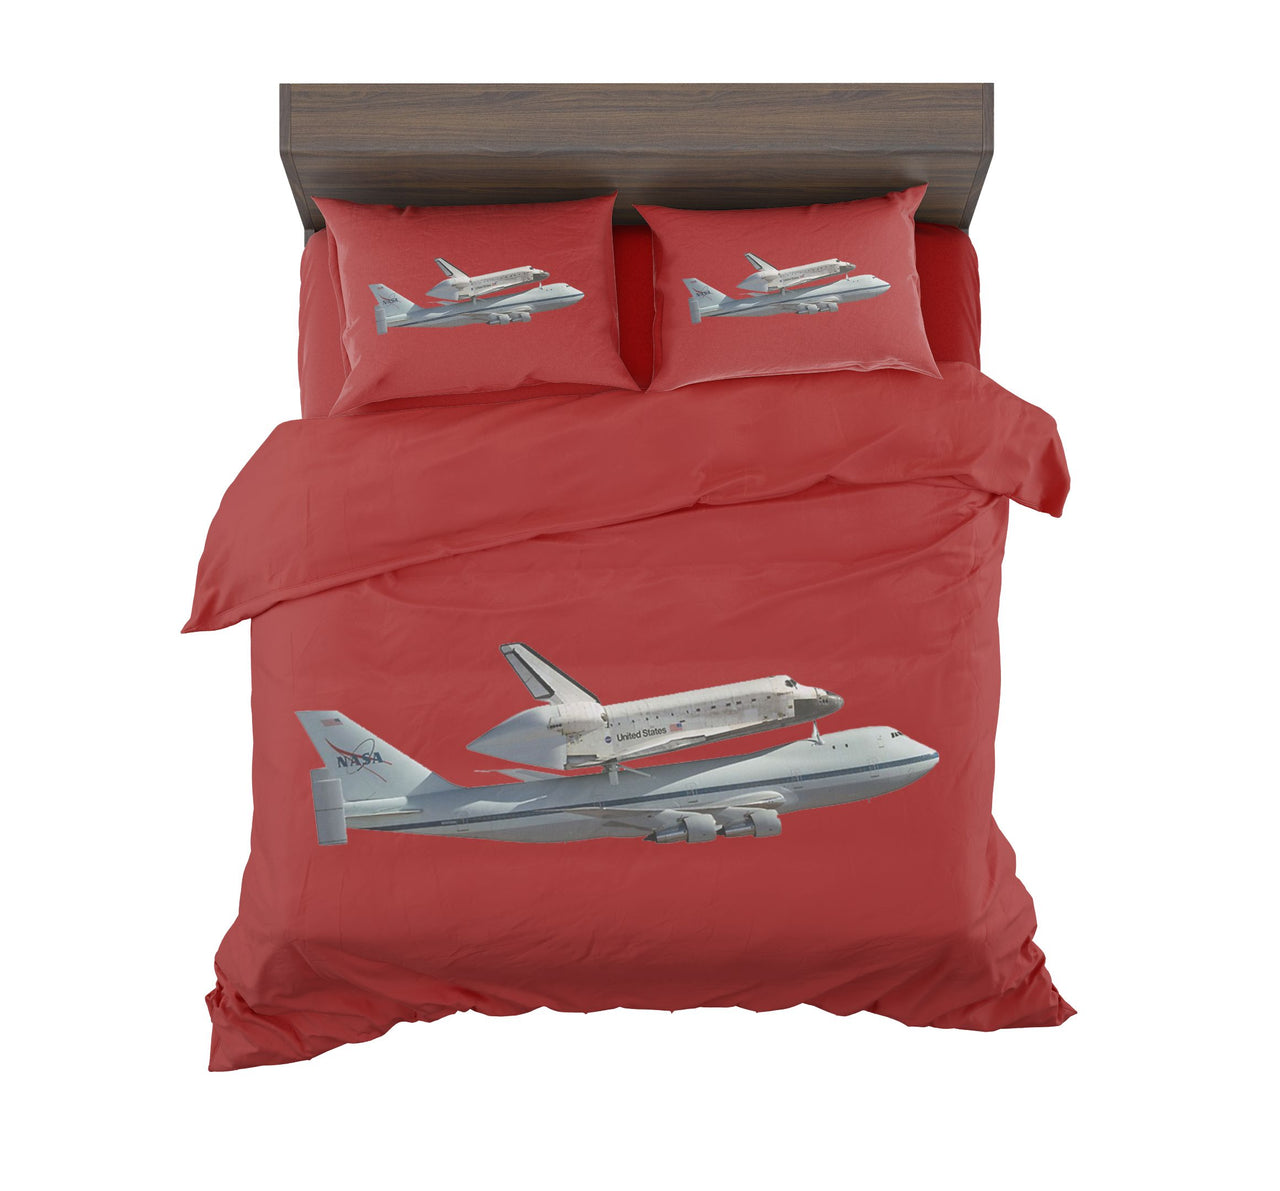 Space shuttle on 747 Designed Bedding Sets